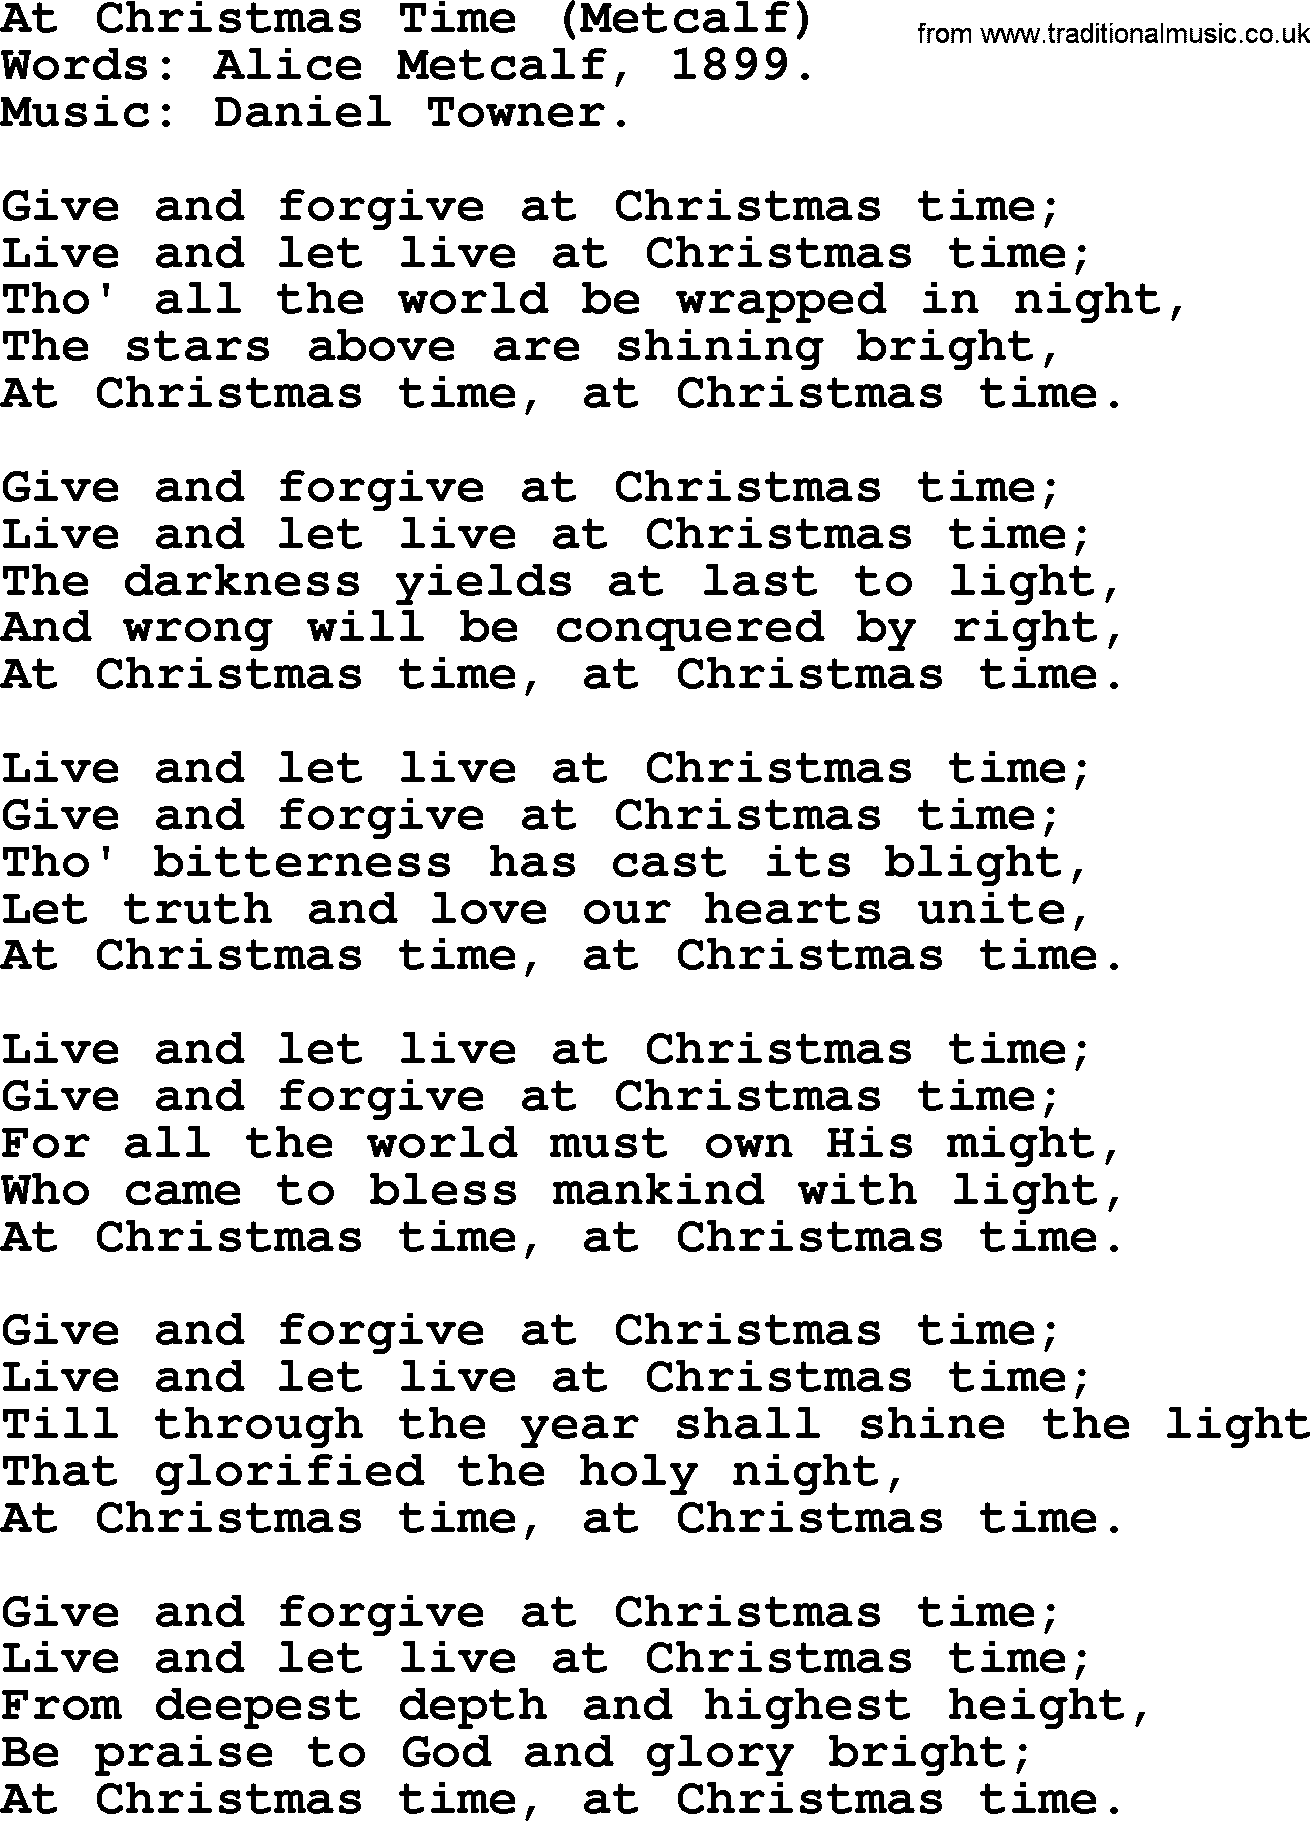 Christmas Hymns, Carols and Songs, title: At Christmas Time (metcalf), lyrics with PDF